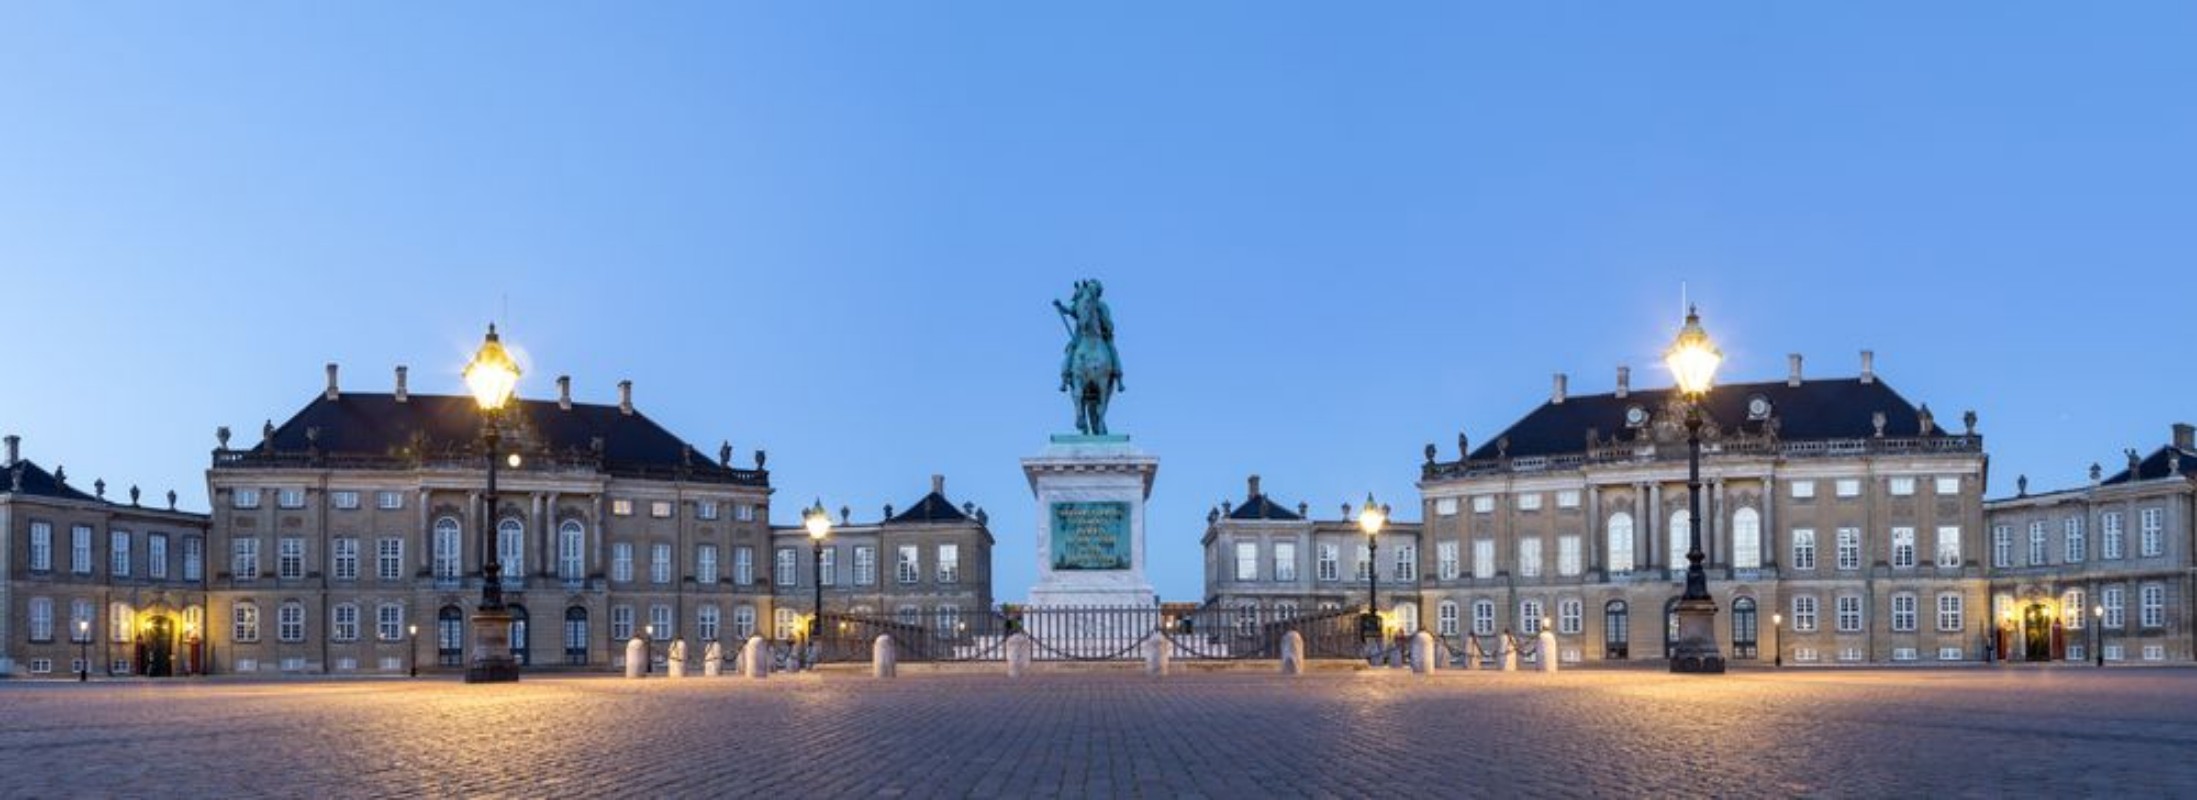 Bild på Amalienborg Palace in Copenhagen by night